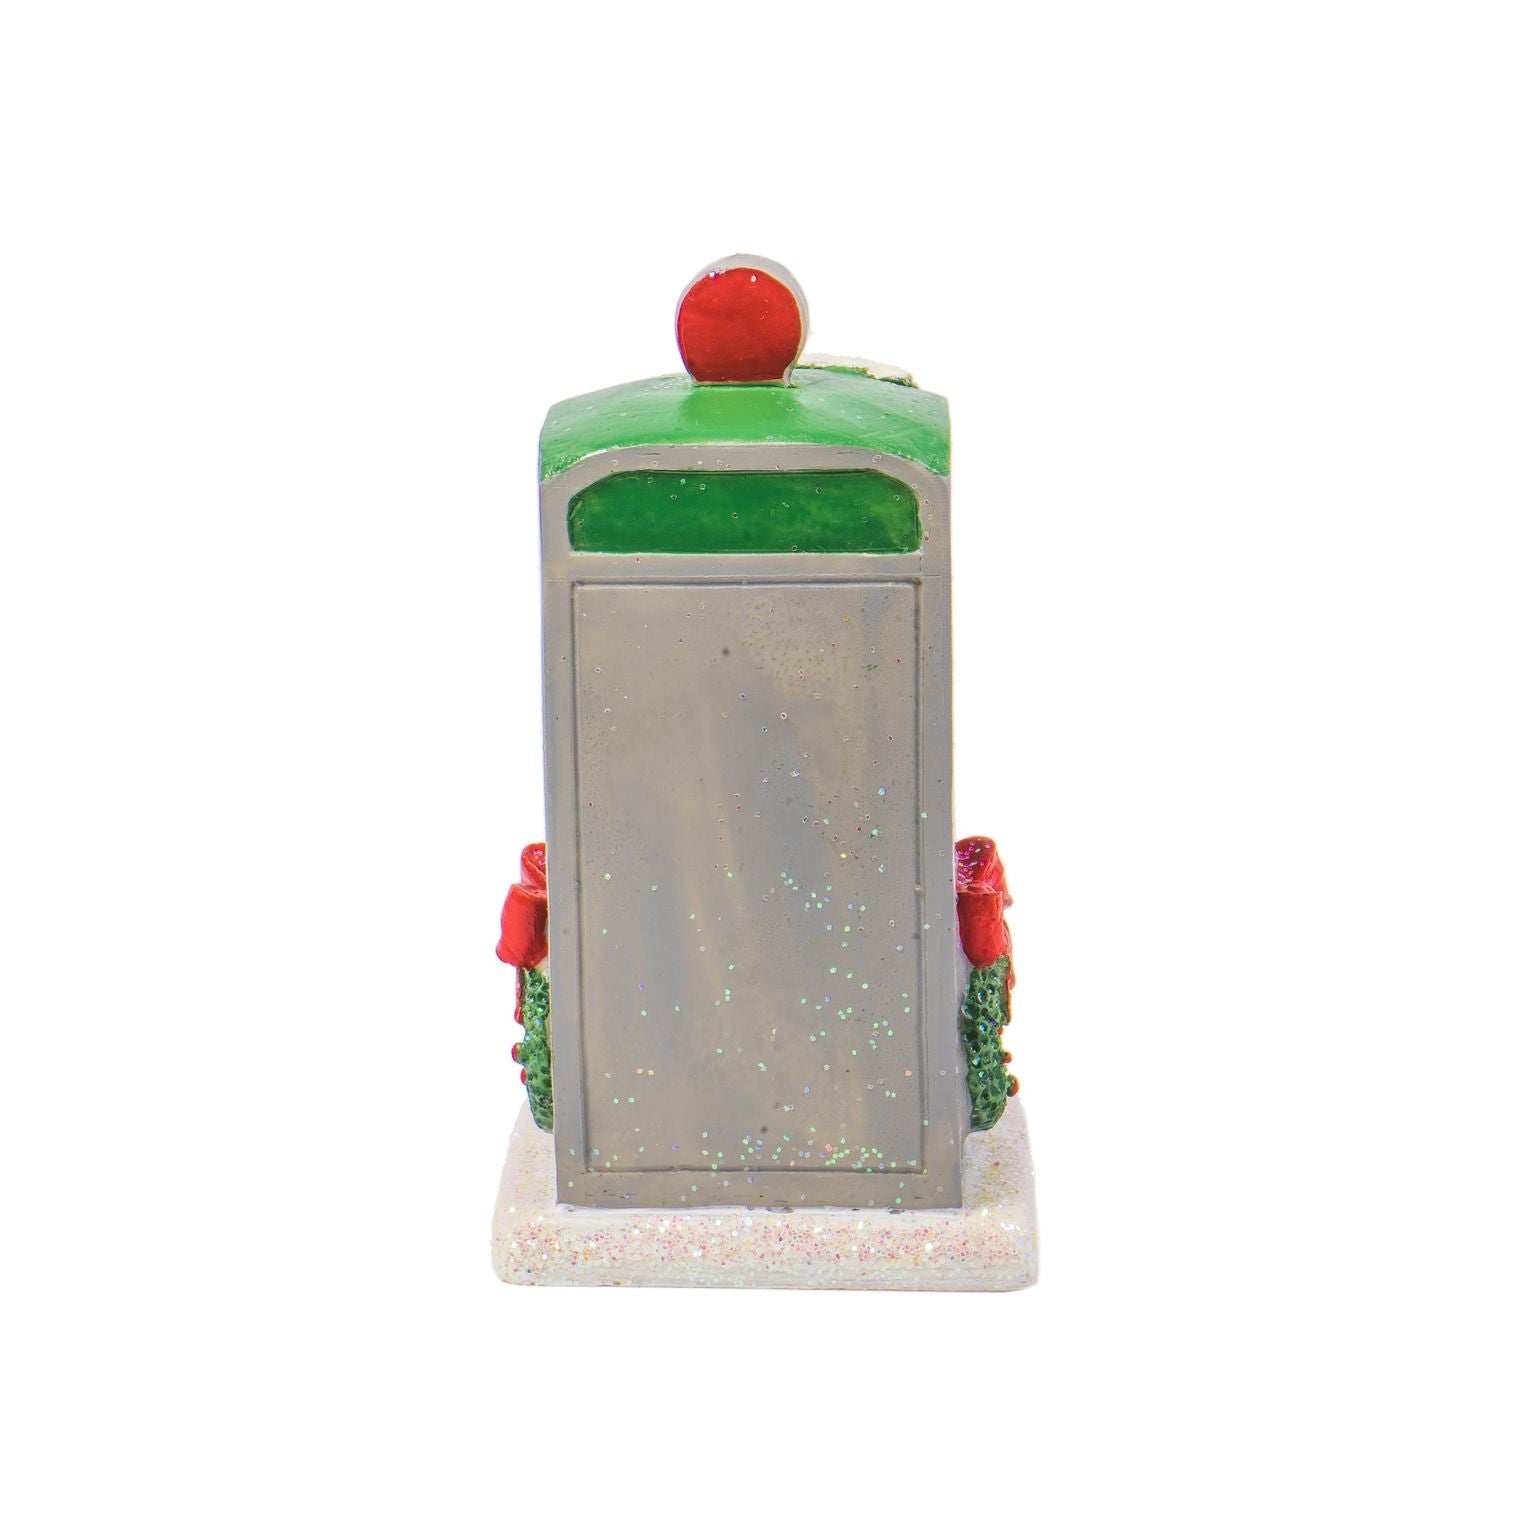 Miniature Santa Phone Booth